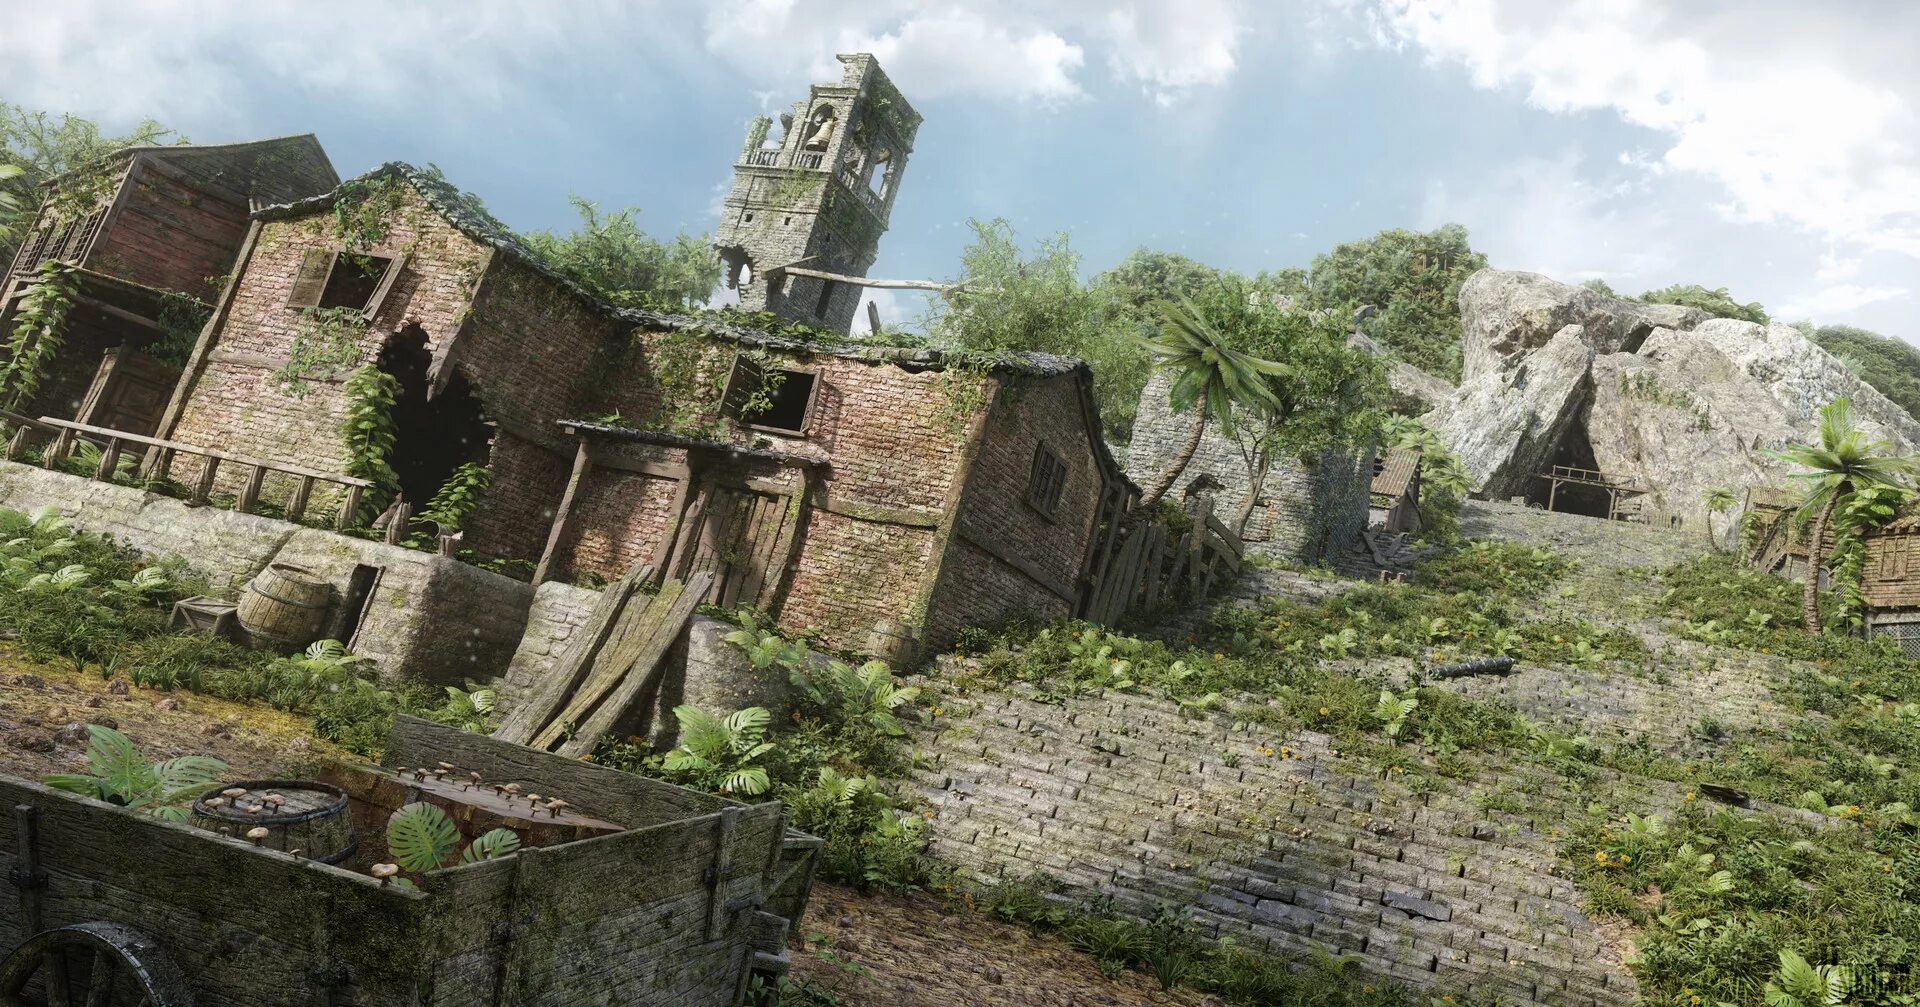 Uncharted 4 environment. Uncharted дом. Места из игр. Дом из Uncharted 4. Abandoned village